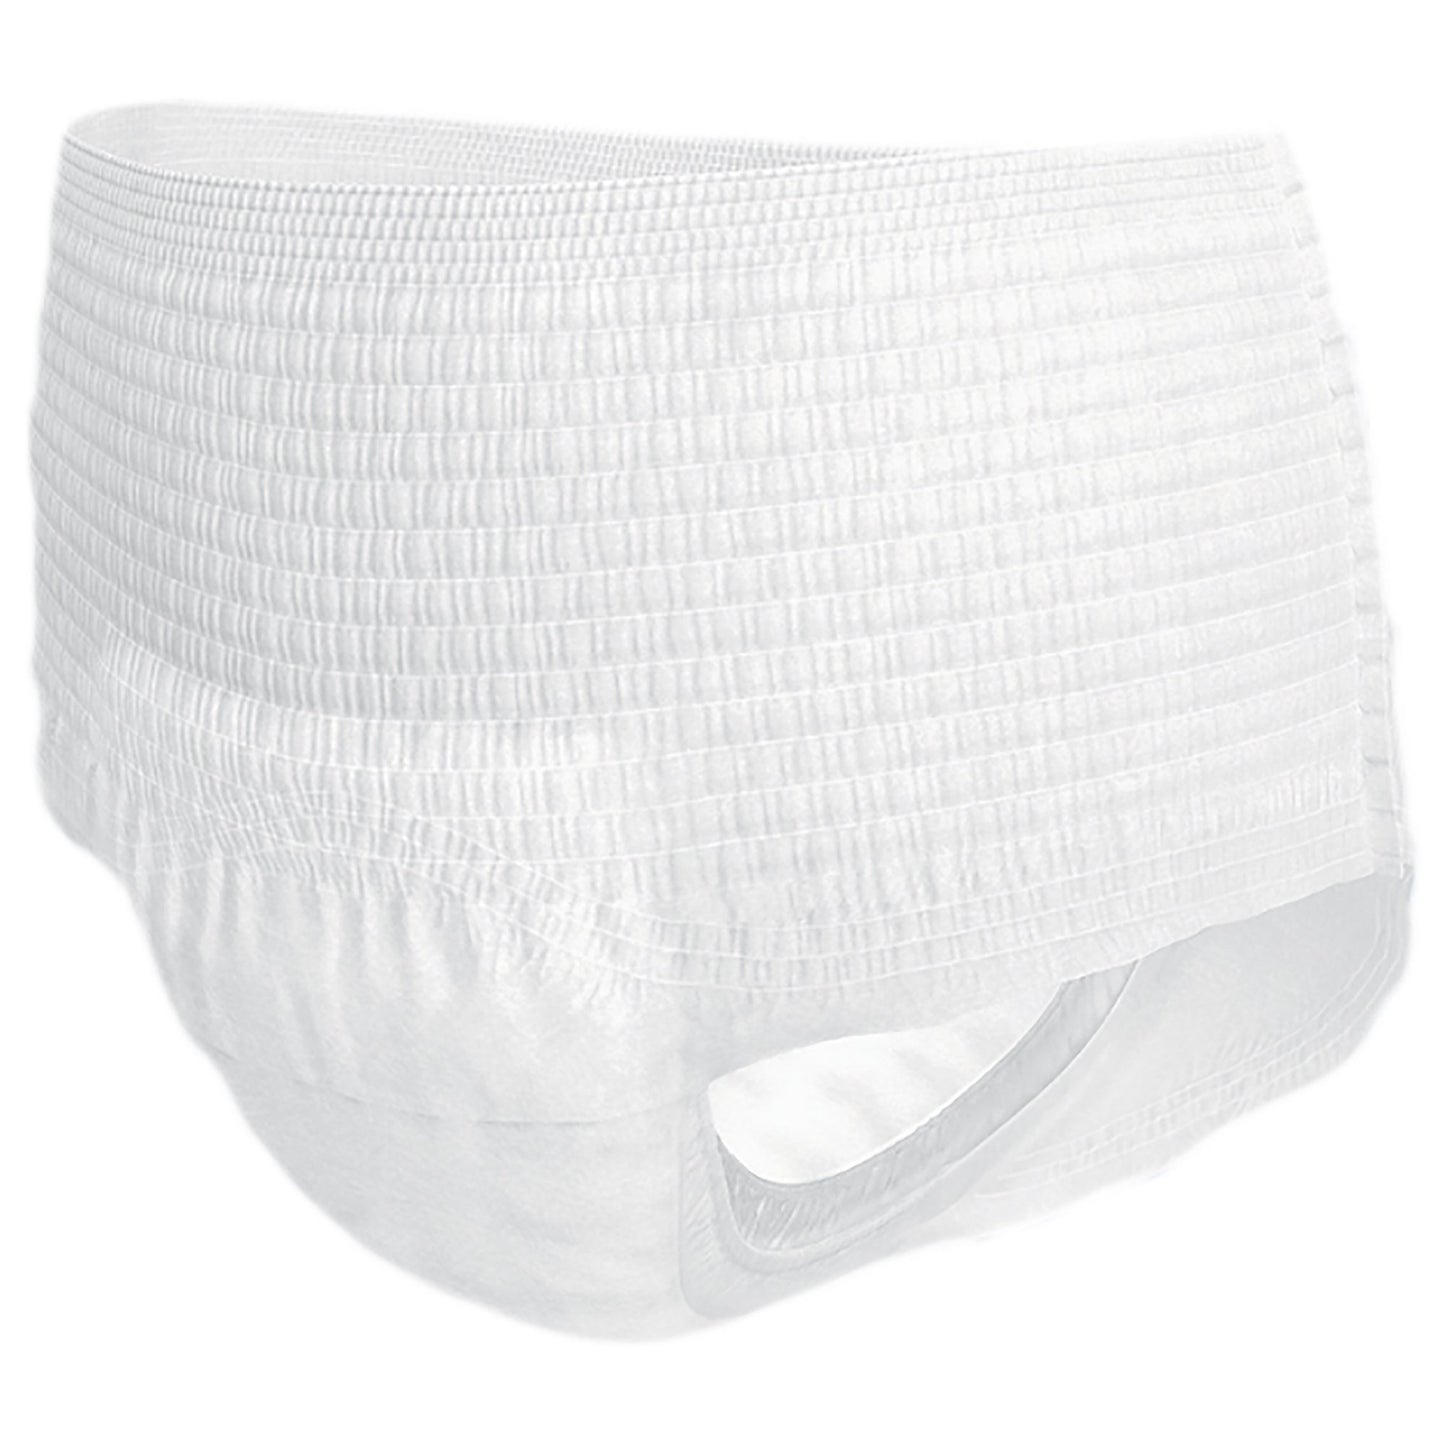 Tena® Plus Absorbent Underwear, Small, 15 ct